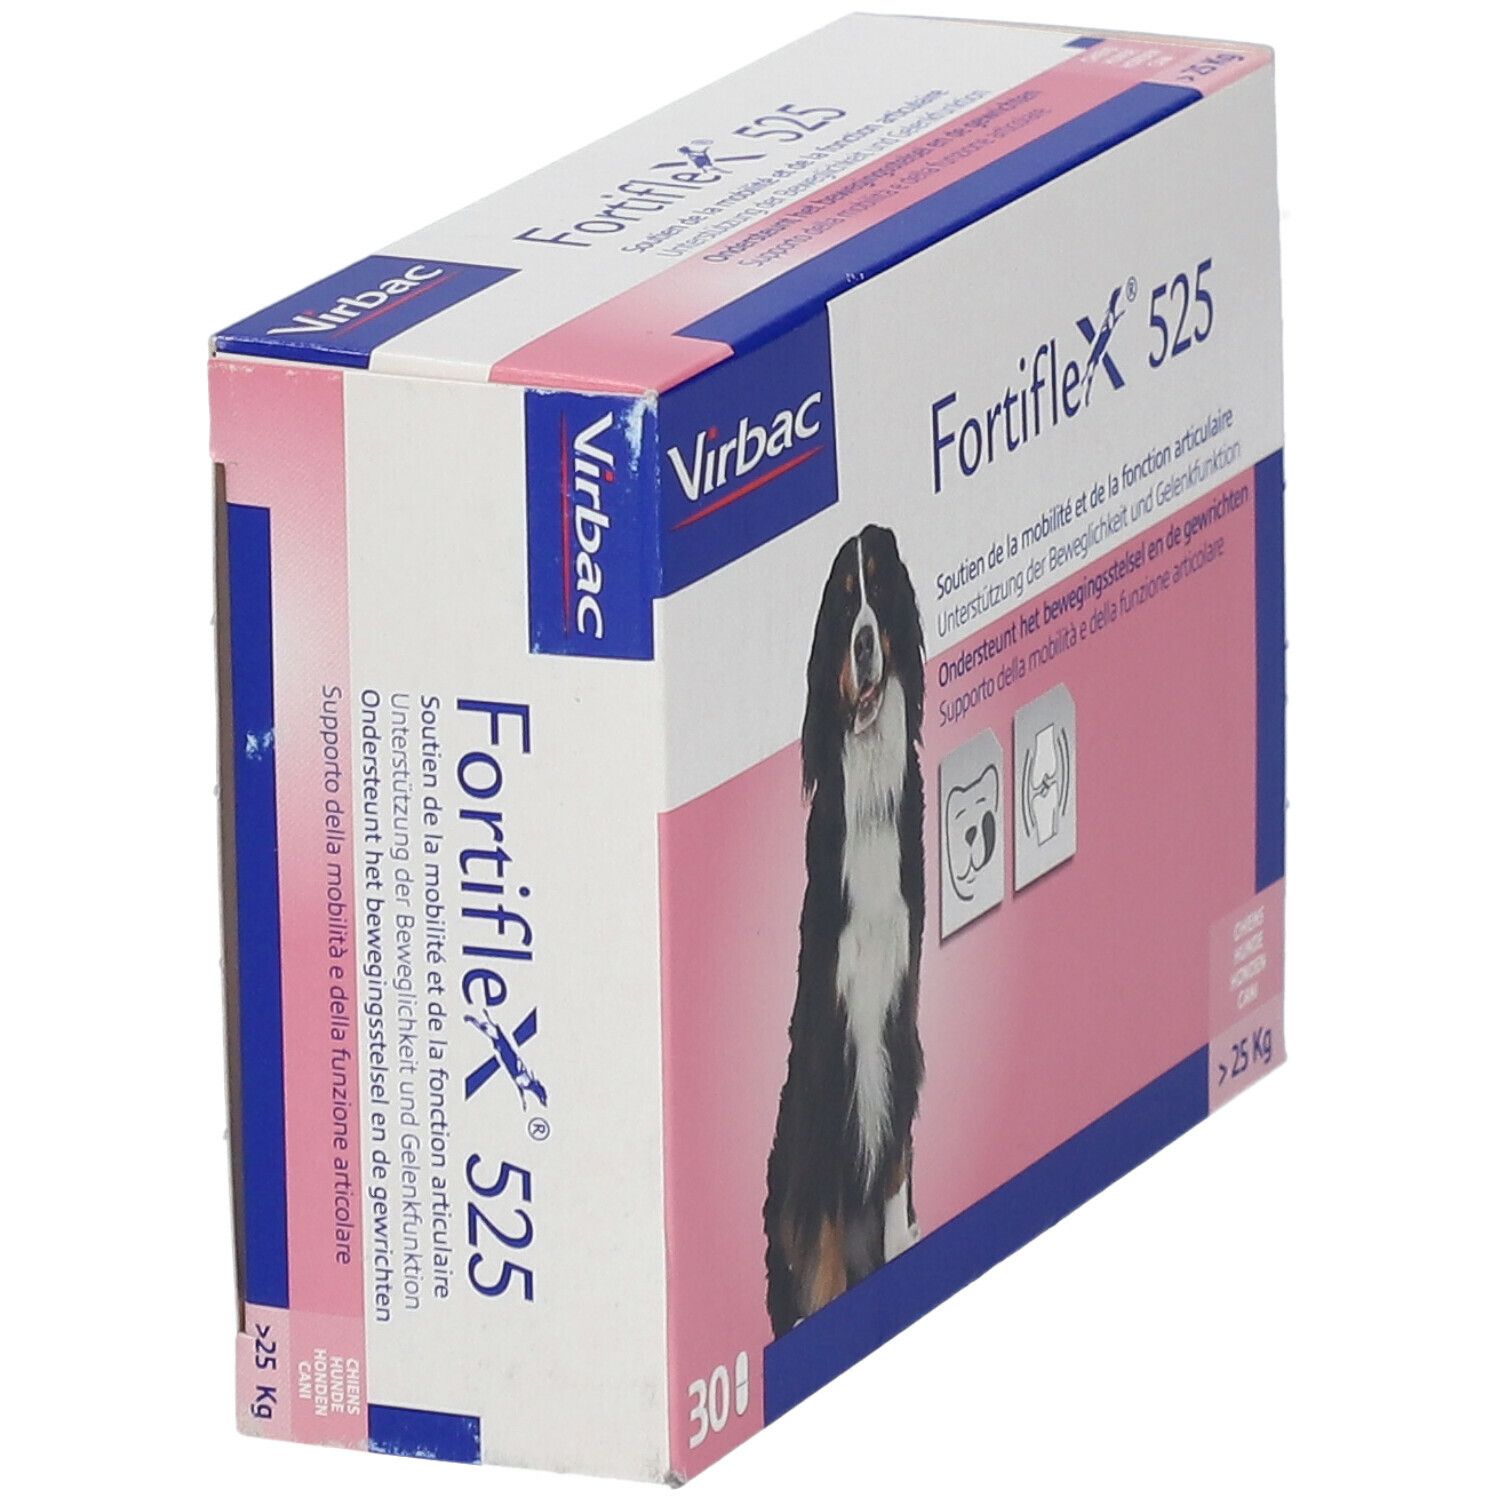 Virbac Fortiflex 525 mg